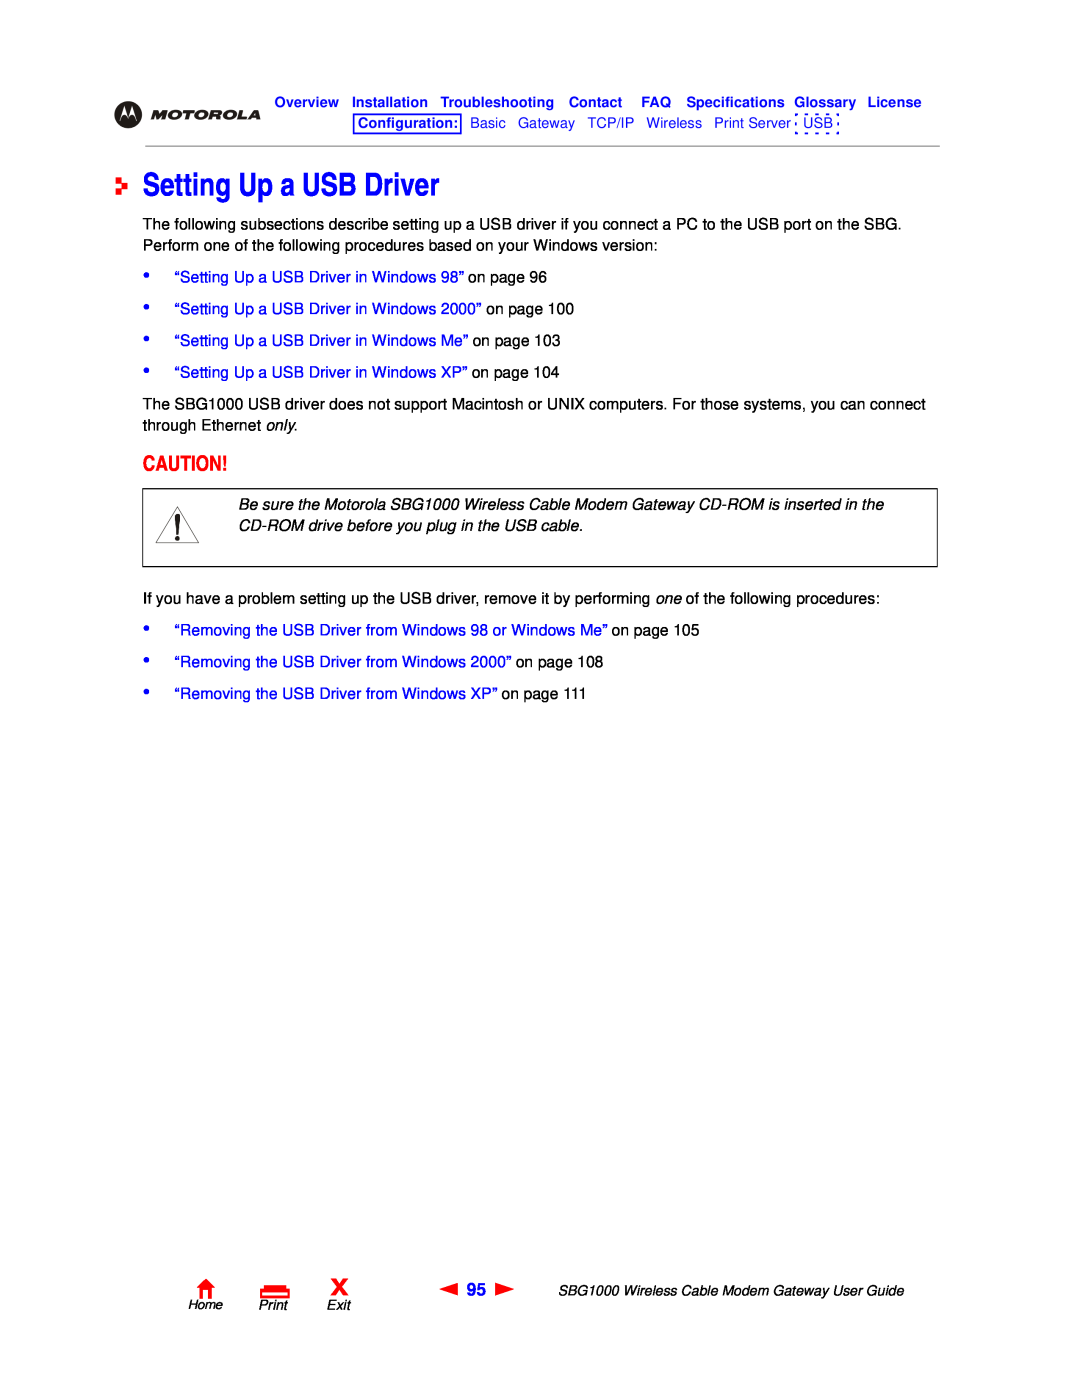 Motorola SBG1000 “Setting Up a USB Driver in Windows 98” on page, “Setting Up a USB Driver in Windows 2000” on page 